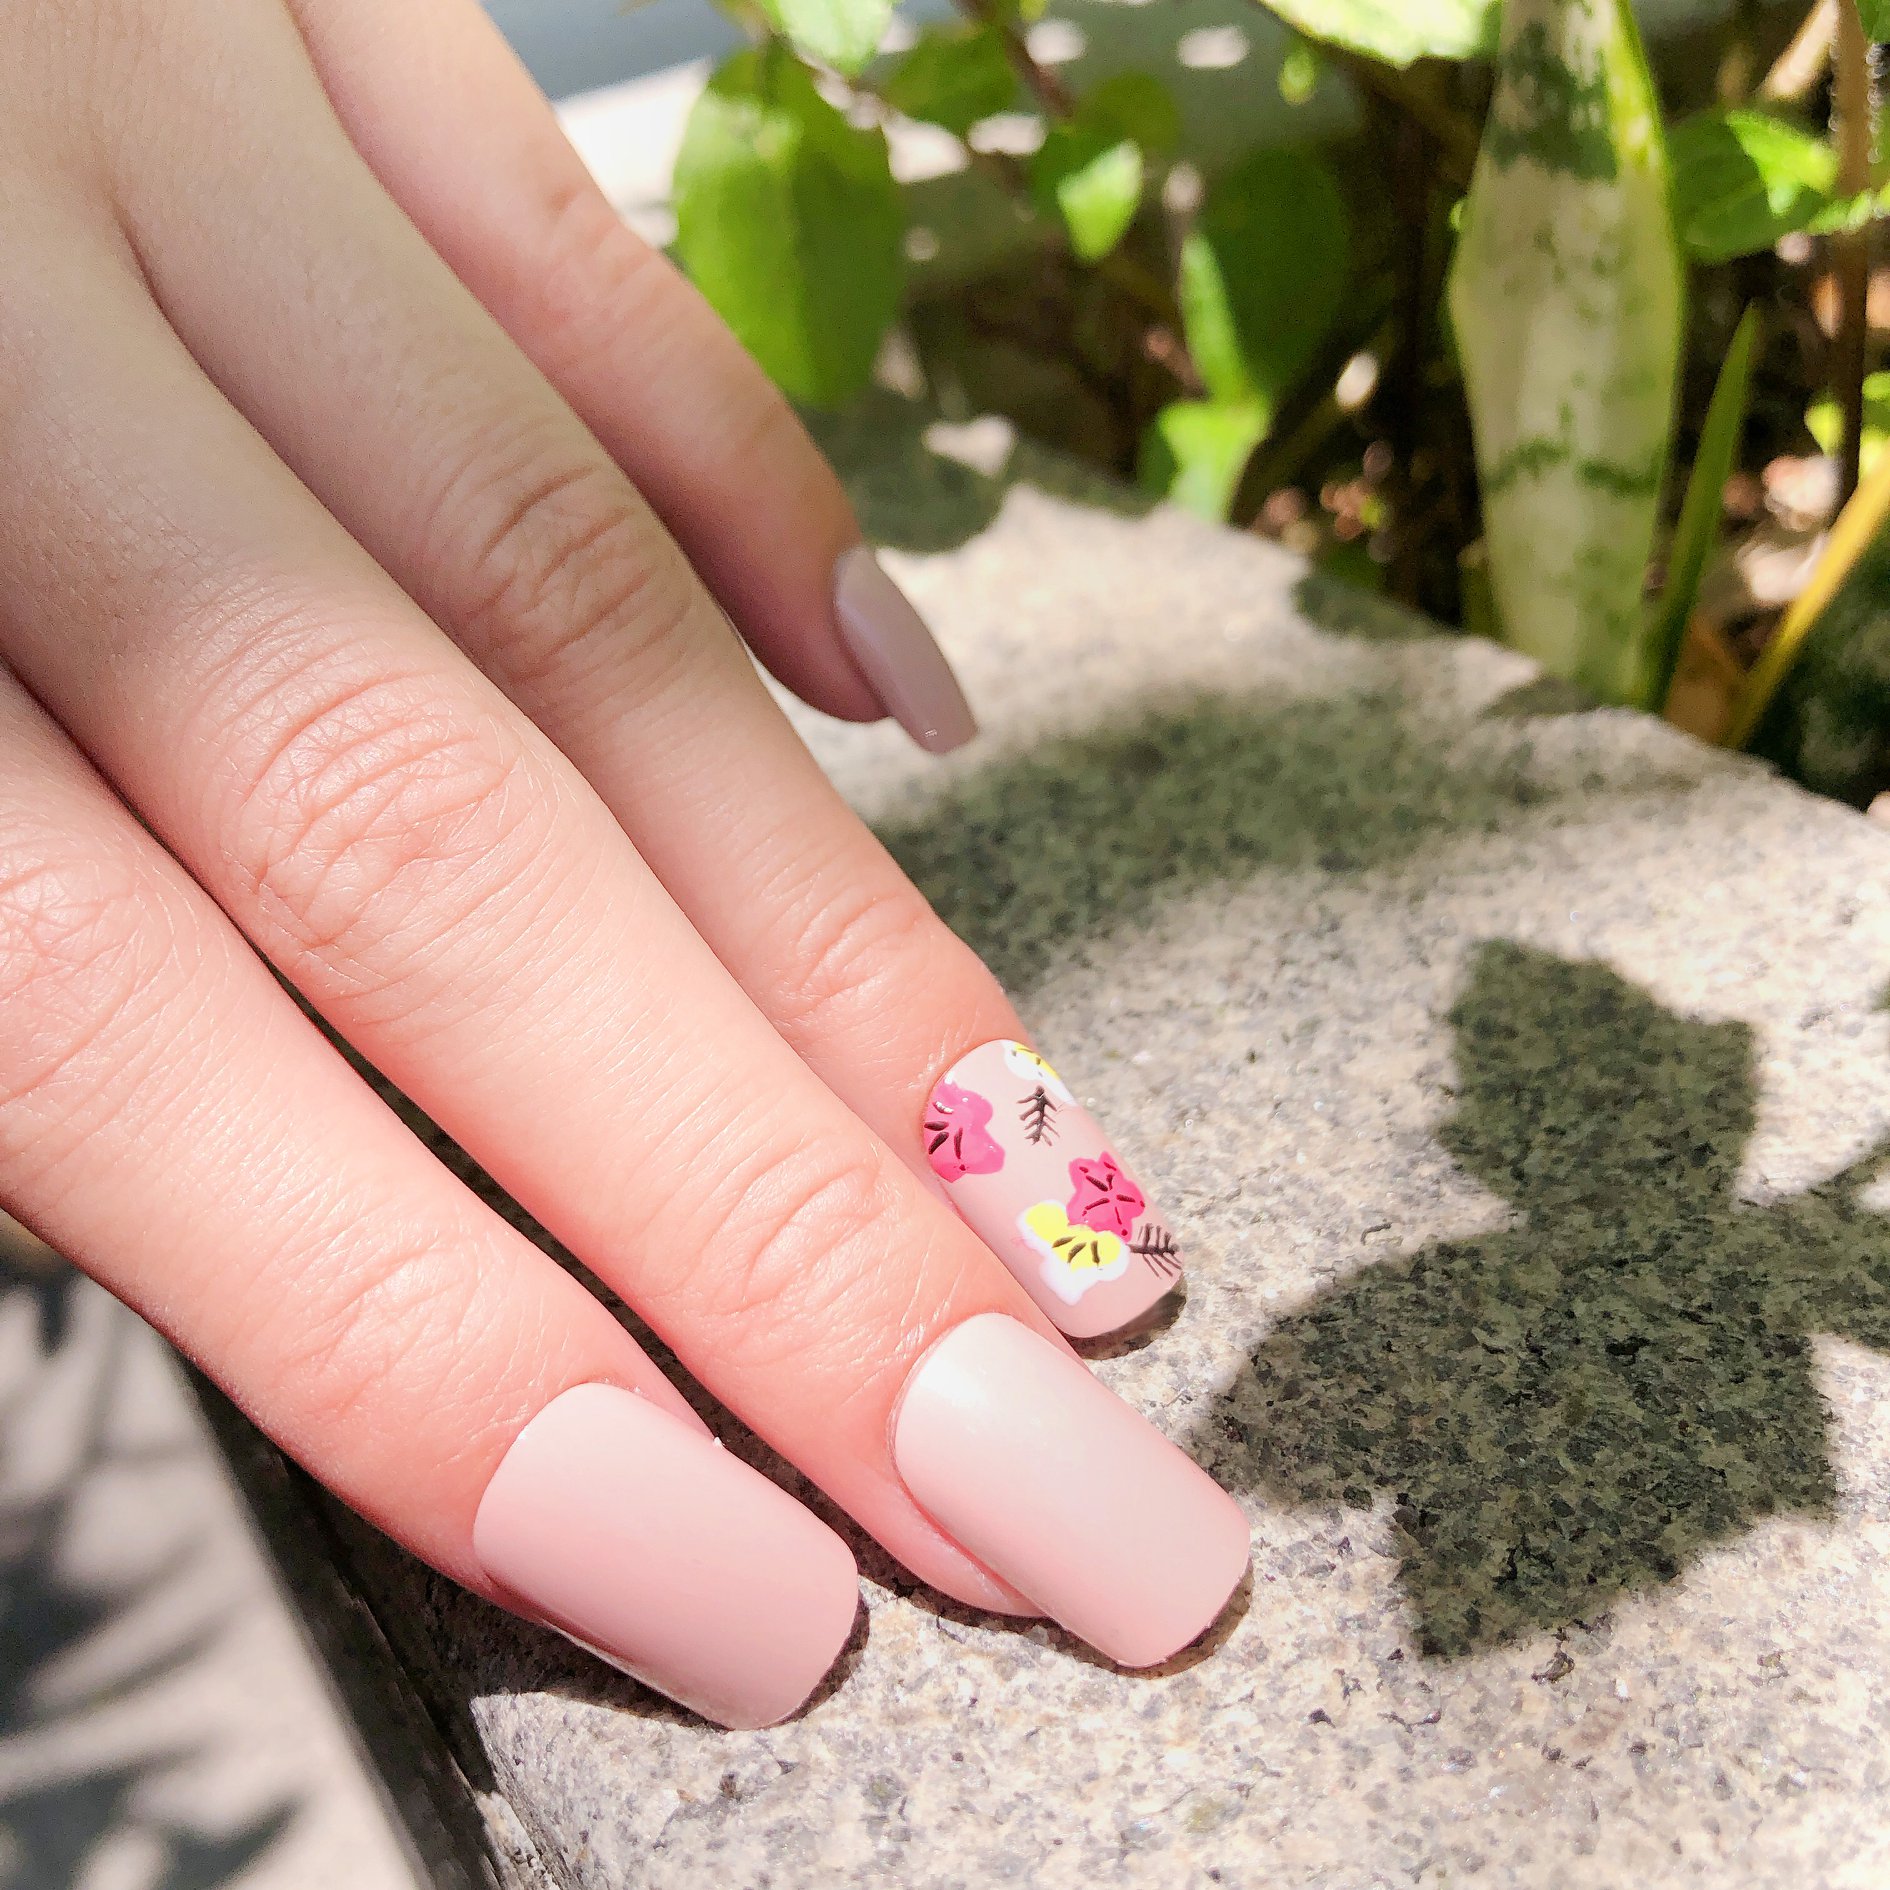 〈nailnail.creation〉 Beautiful nails are in bloom